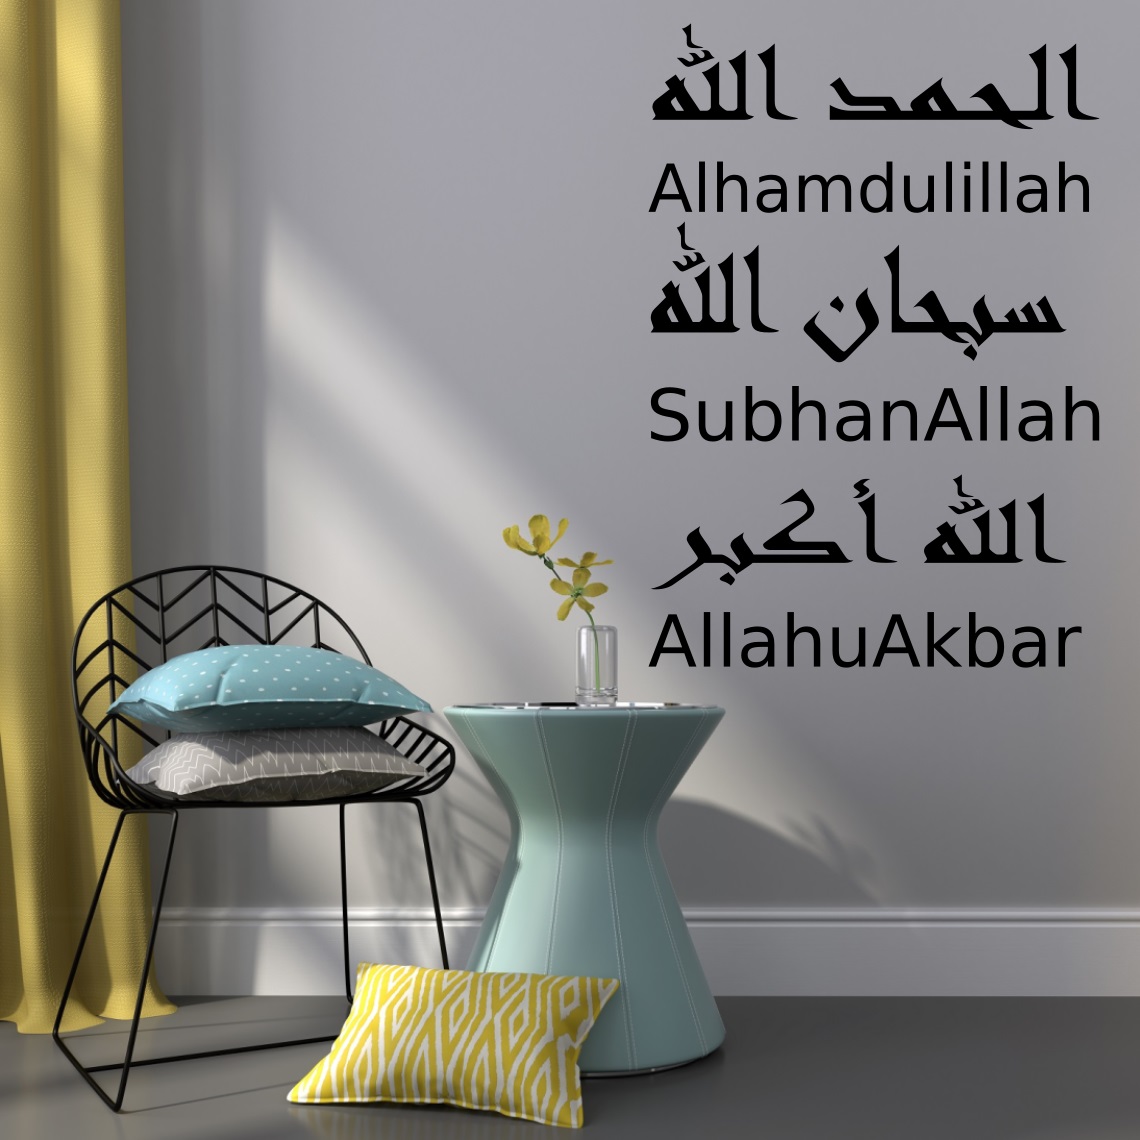 Subhanallah Alhamdulillah Allahu Akbar in Arabic English - Wall Decal